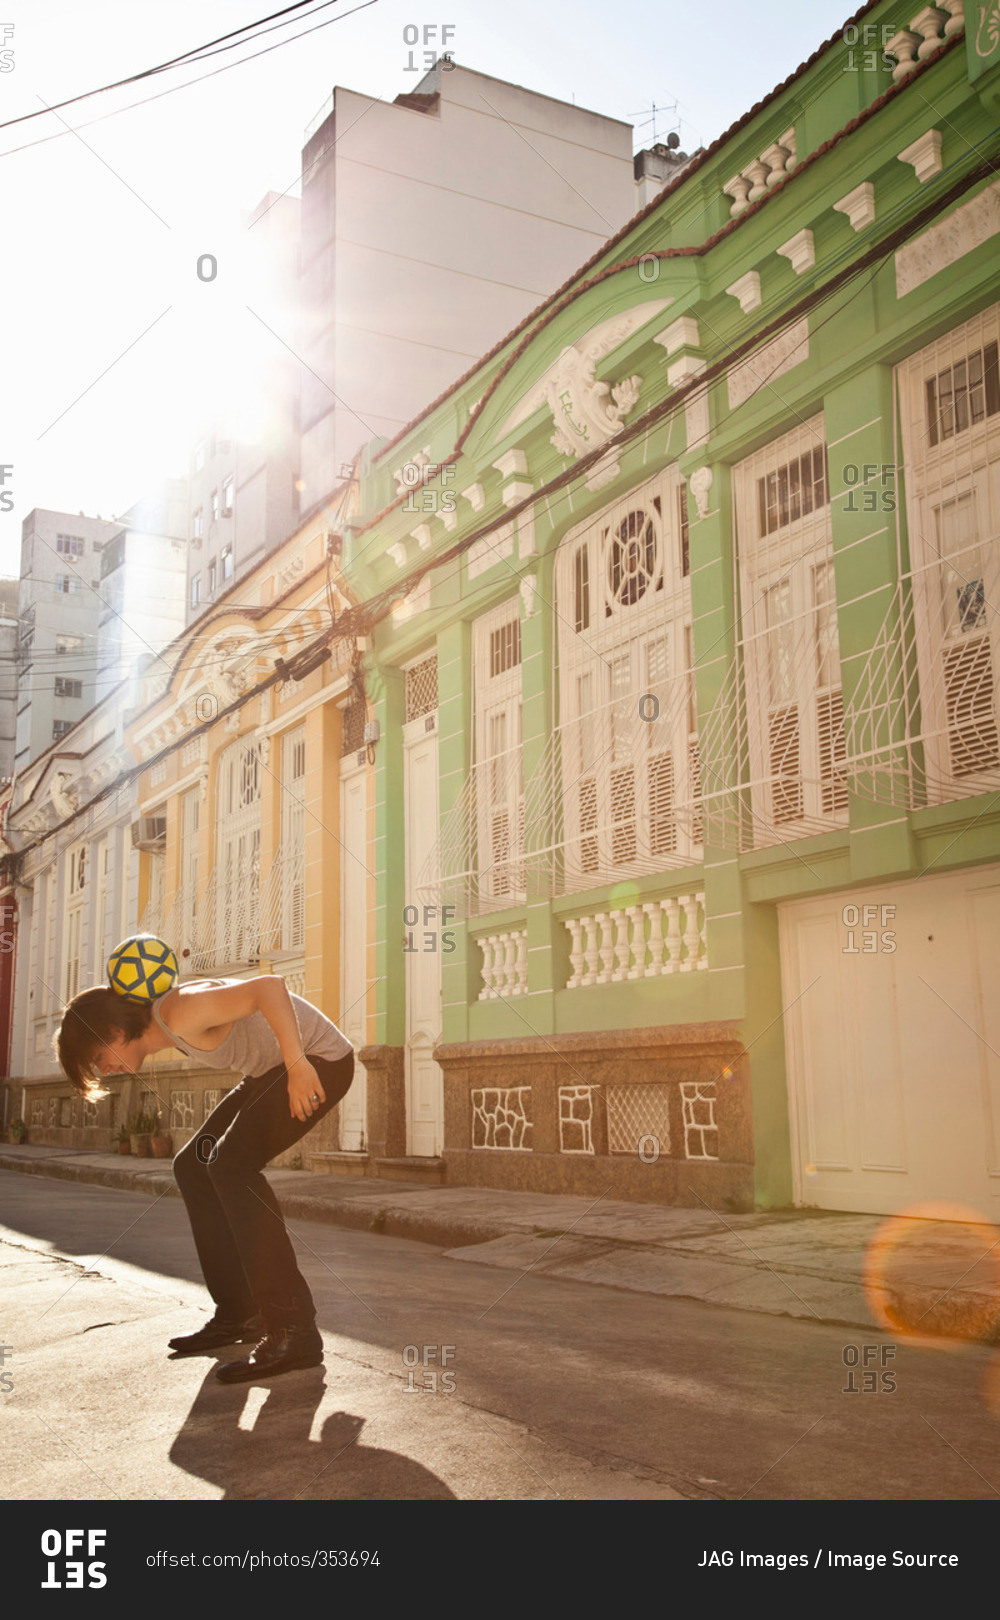 Student celebrating with soccer skills in the street, Rio de Janeiro, Brazil